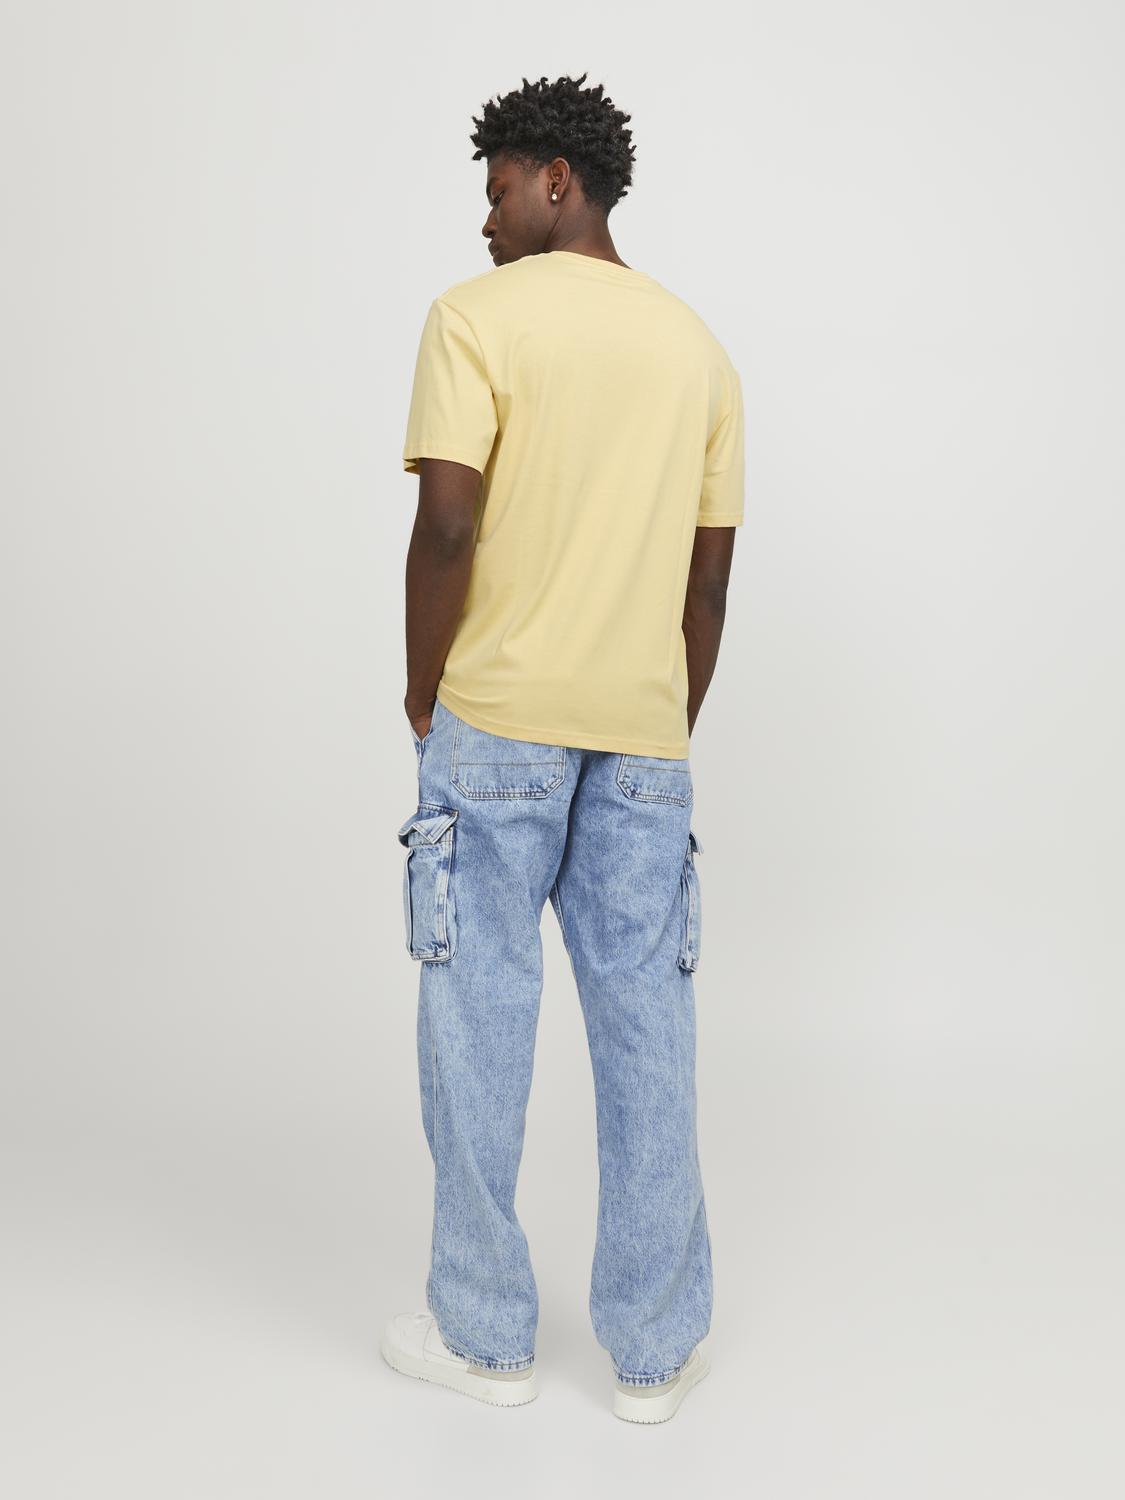 Camiseta manga corta amarilla - JORVESTERBRO